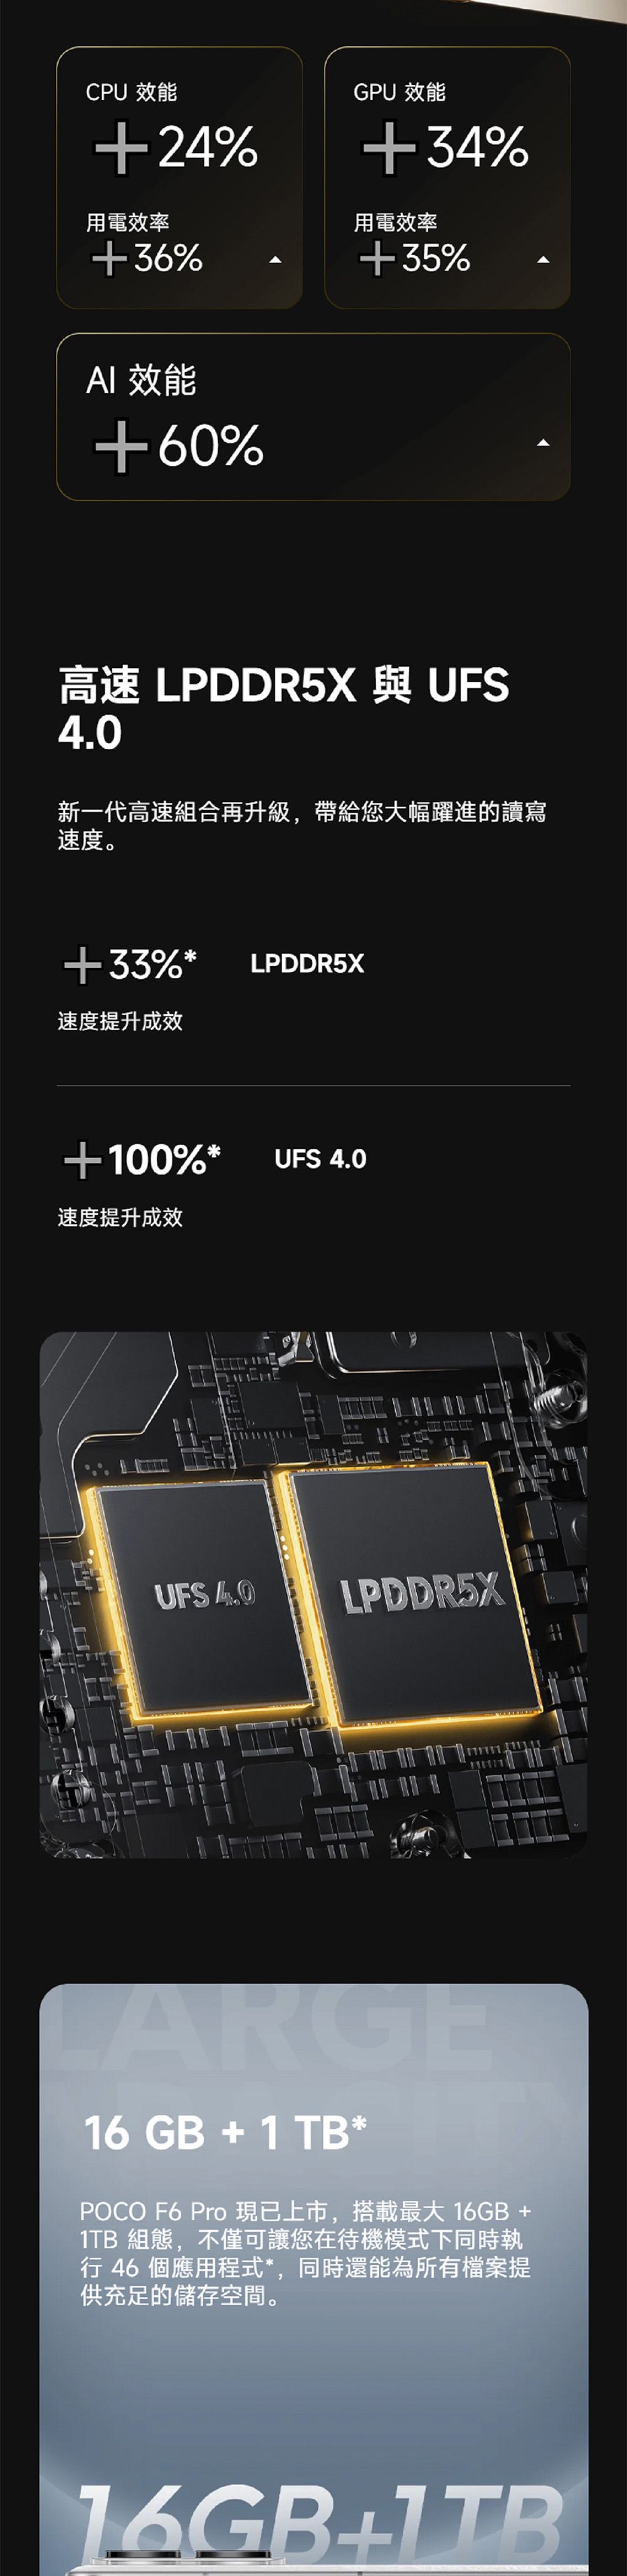 CPU 24%用電效率36% 效能60%GPU 效能34%用電效率35%高速 LPDDR5X 與 UFS4.0新一代高速組合再升級,帶給您大幅躍進的讀寫速度。33%速度提升成效LPDDR5X+100%*速度提升成效UFS 4.0UFS 4.0LPDDR5X16 GB + 1 TB*POCO F6 Pro 現已上市,搭載最大 16GB +1TB 組態,不僅可讓您在待機模式下同時執 46 個應用程式*,同時還能為所有檔案提供充足的儲存空間。16GB+1TB